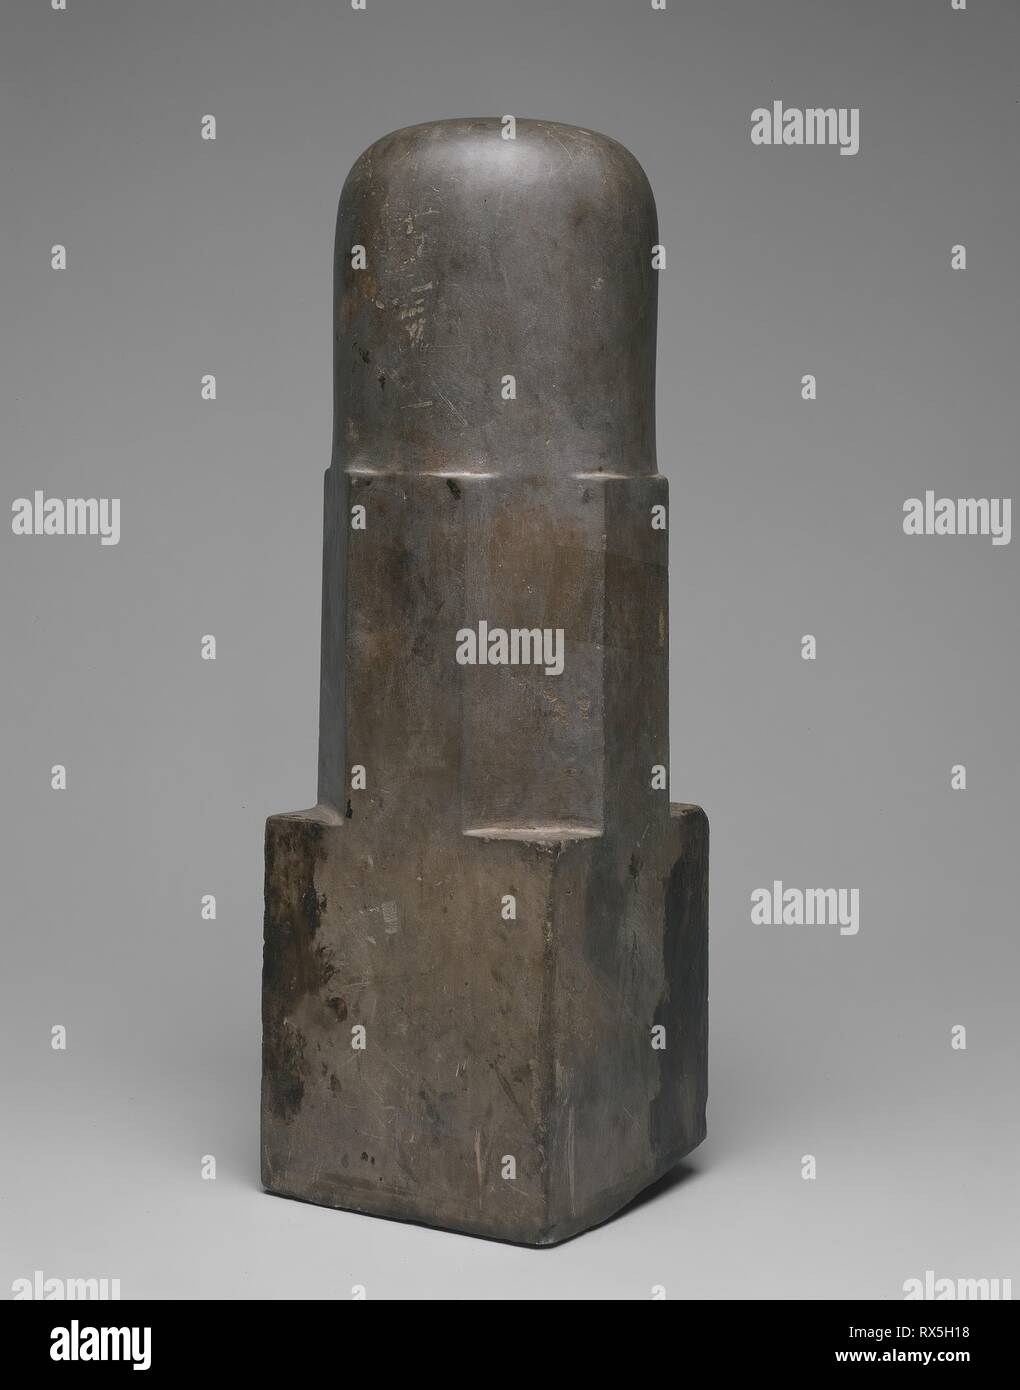 Emblem der Gott Shiva (Linga). Kambodscha. Datum: 901 AD-1300. Abmessungen: 46,7 × 14,6 × 14,6 cm (18 3/8 x 5 3/4 x 5 3/4 in.). Sandstein. Herkunft: Kambodscha. Museum: Das Chicago Art Institute. Stockfoto